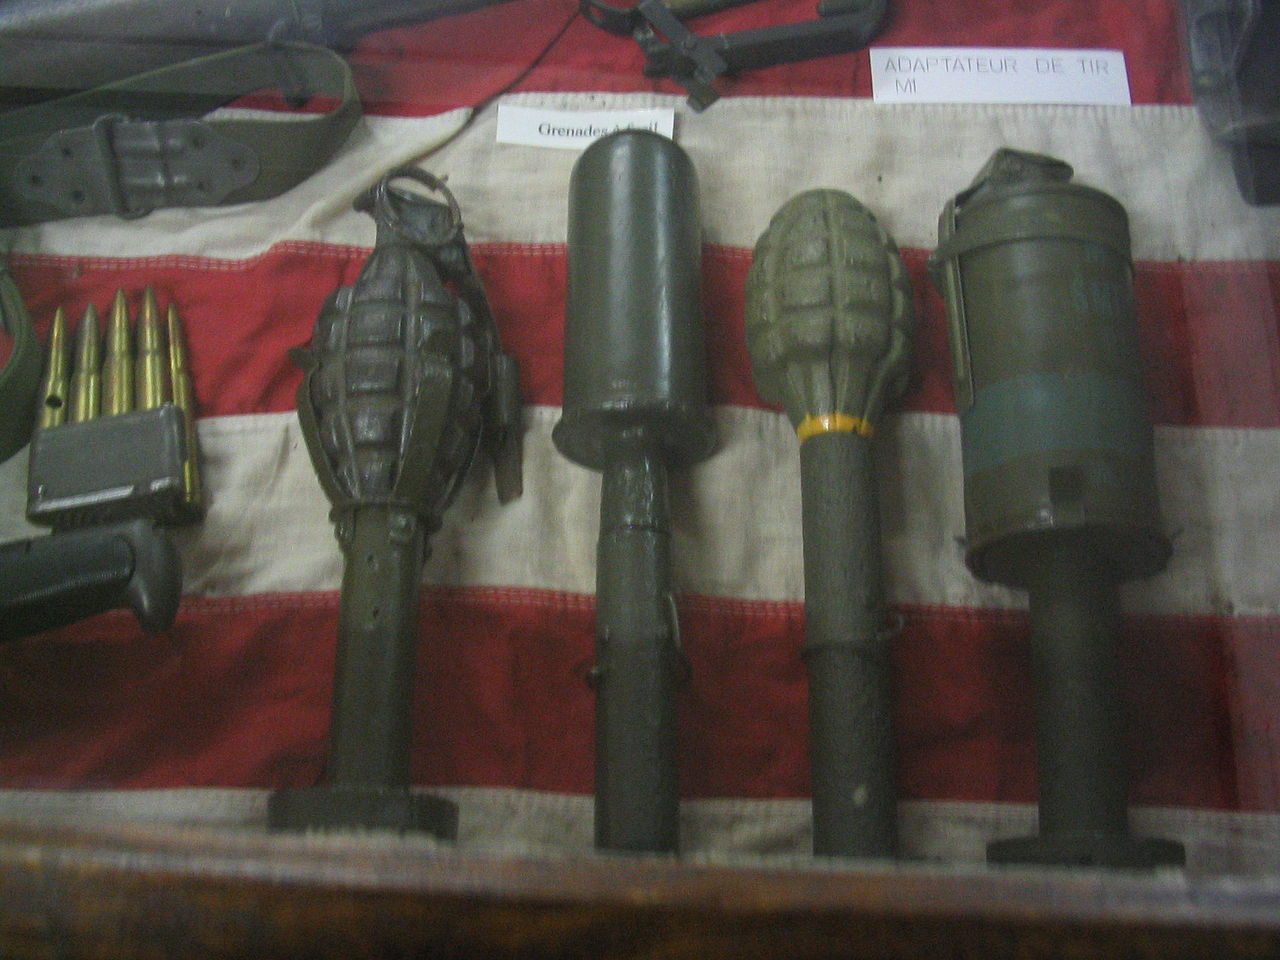 1280px-Hand_grenades_US_-_Battle_of_the_Bulge.jpg